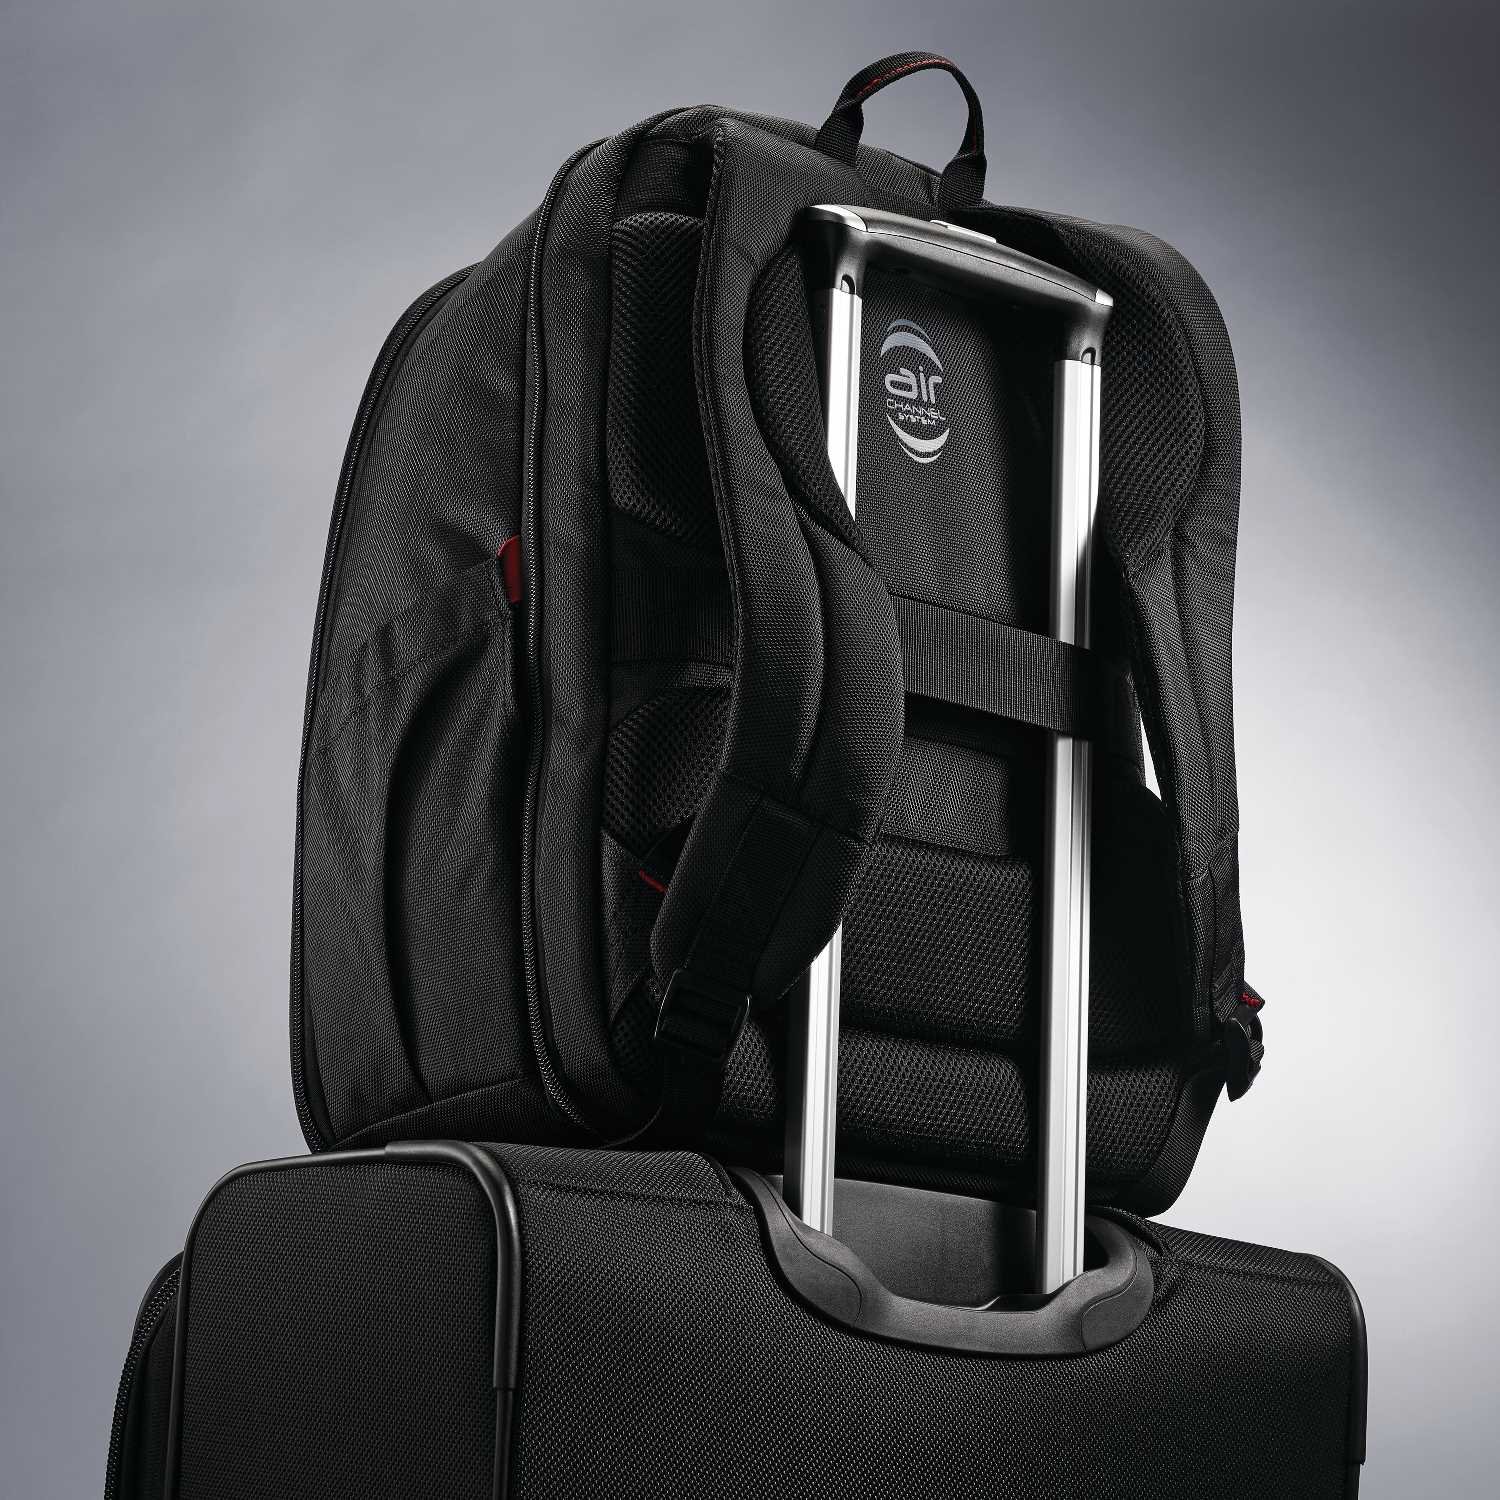 Samsonite Xenon 3.0 Checkpoint Friendly Backpack, Black, Large